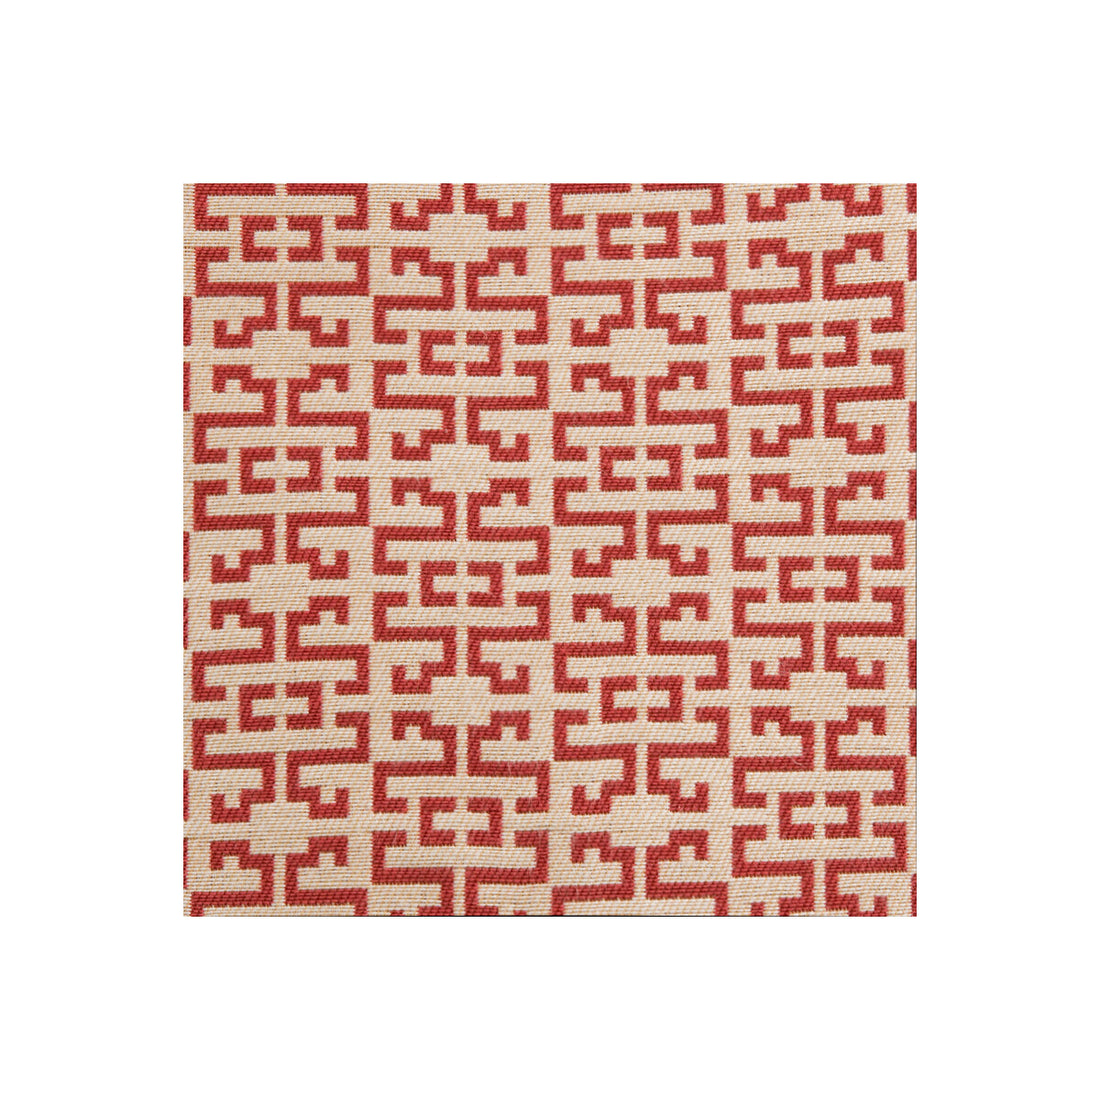 Kravet Smart fabric in 26380-916 color - pattern 26380.916.0 - by Kravet Smart